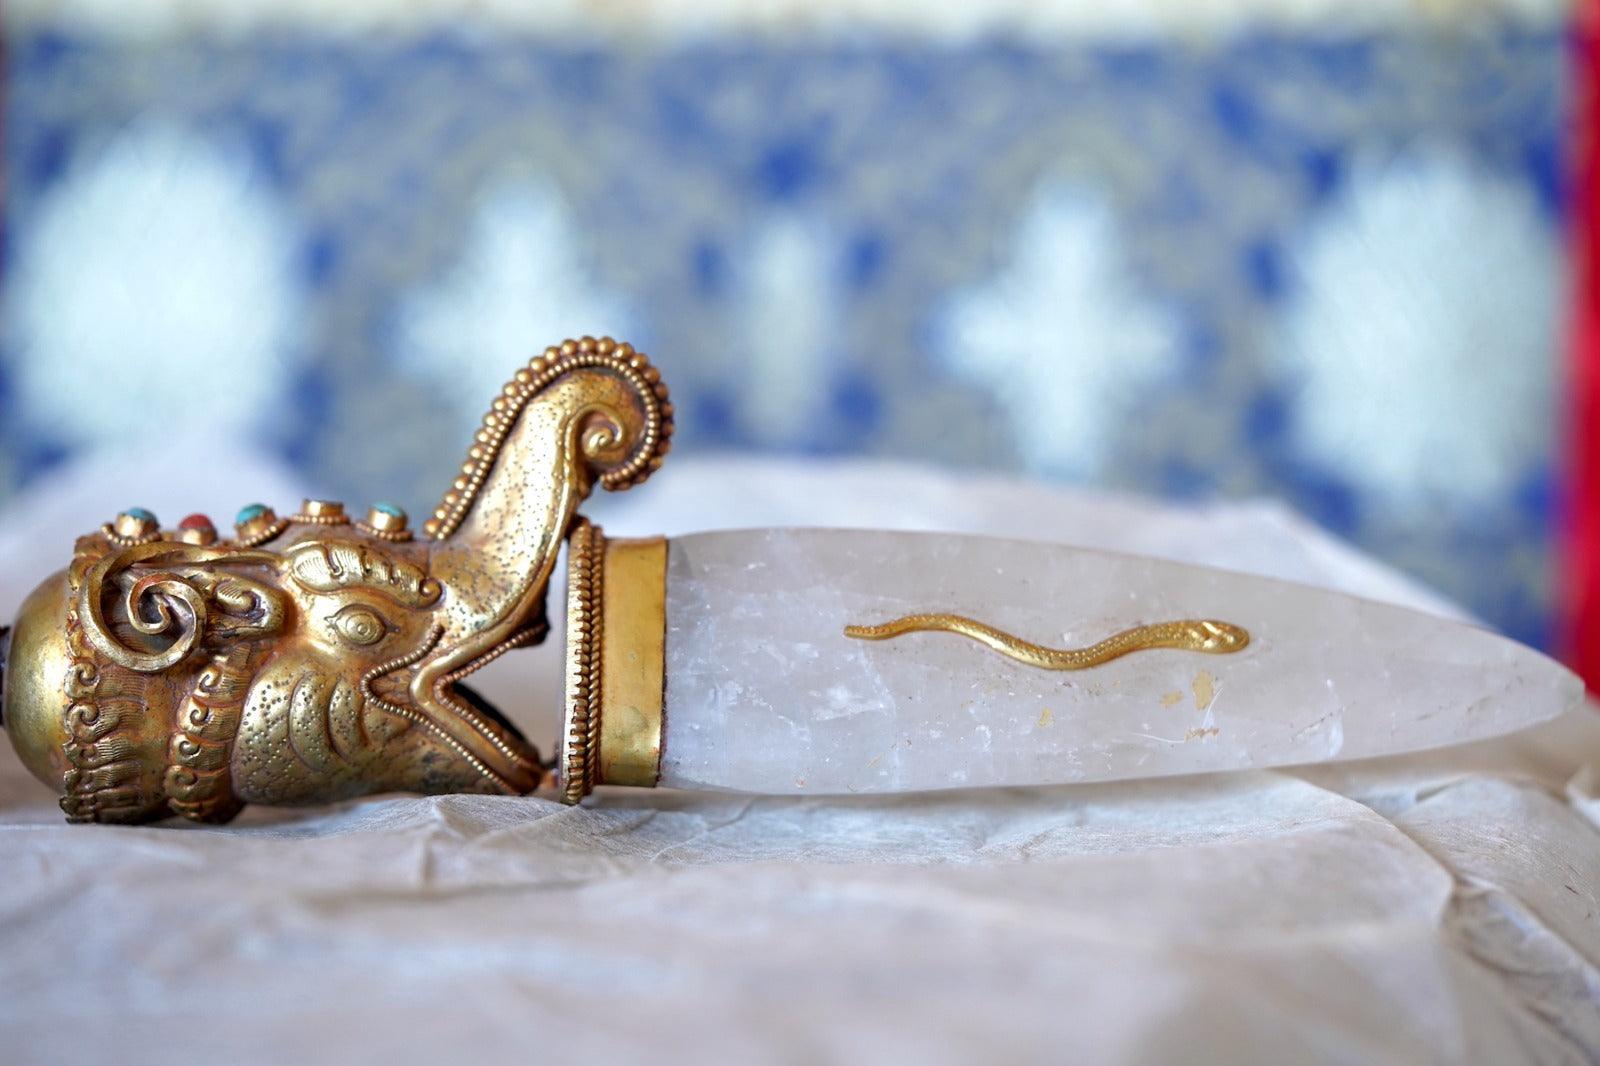 Old tibetan dorje phurba dagger for rituals with crystal bajra